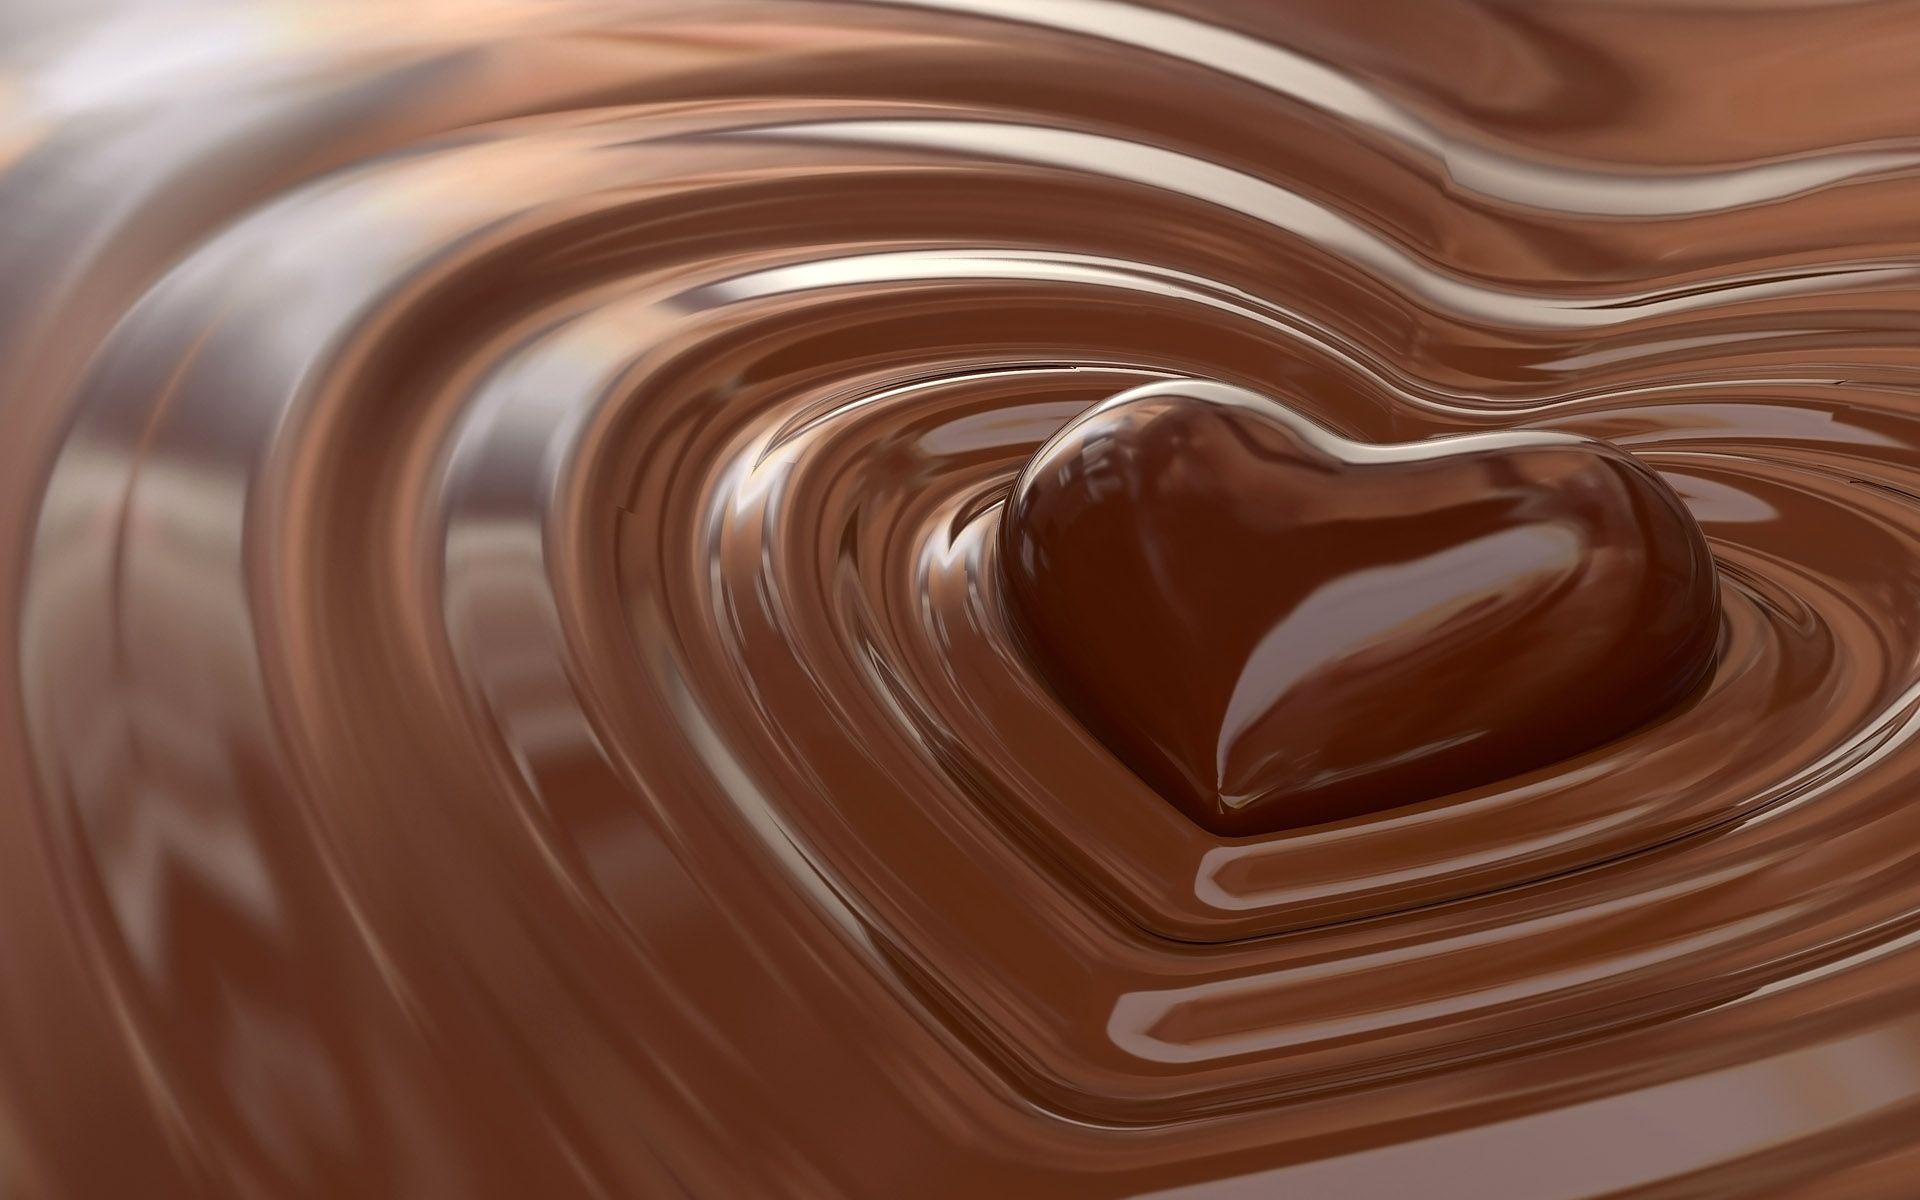 Chocolate Love HD Wallpaper. fbpapa